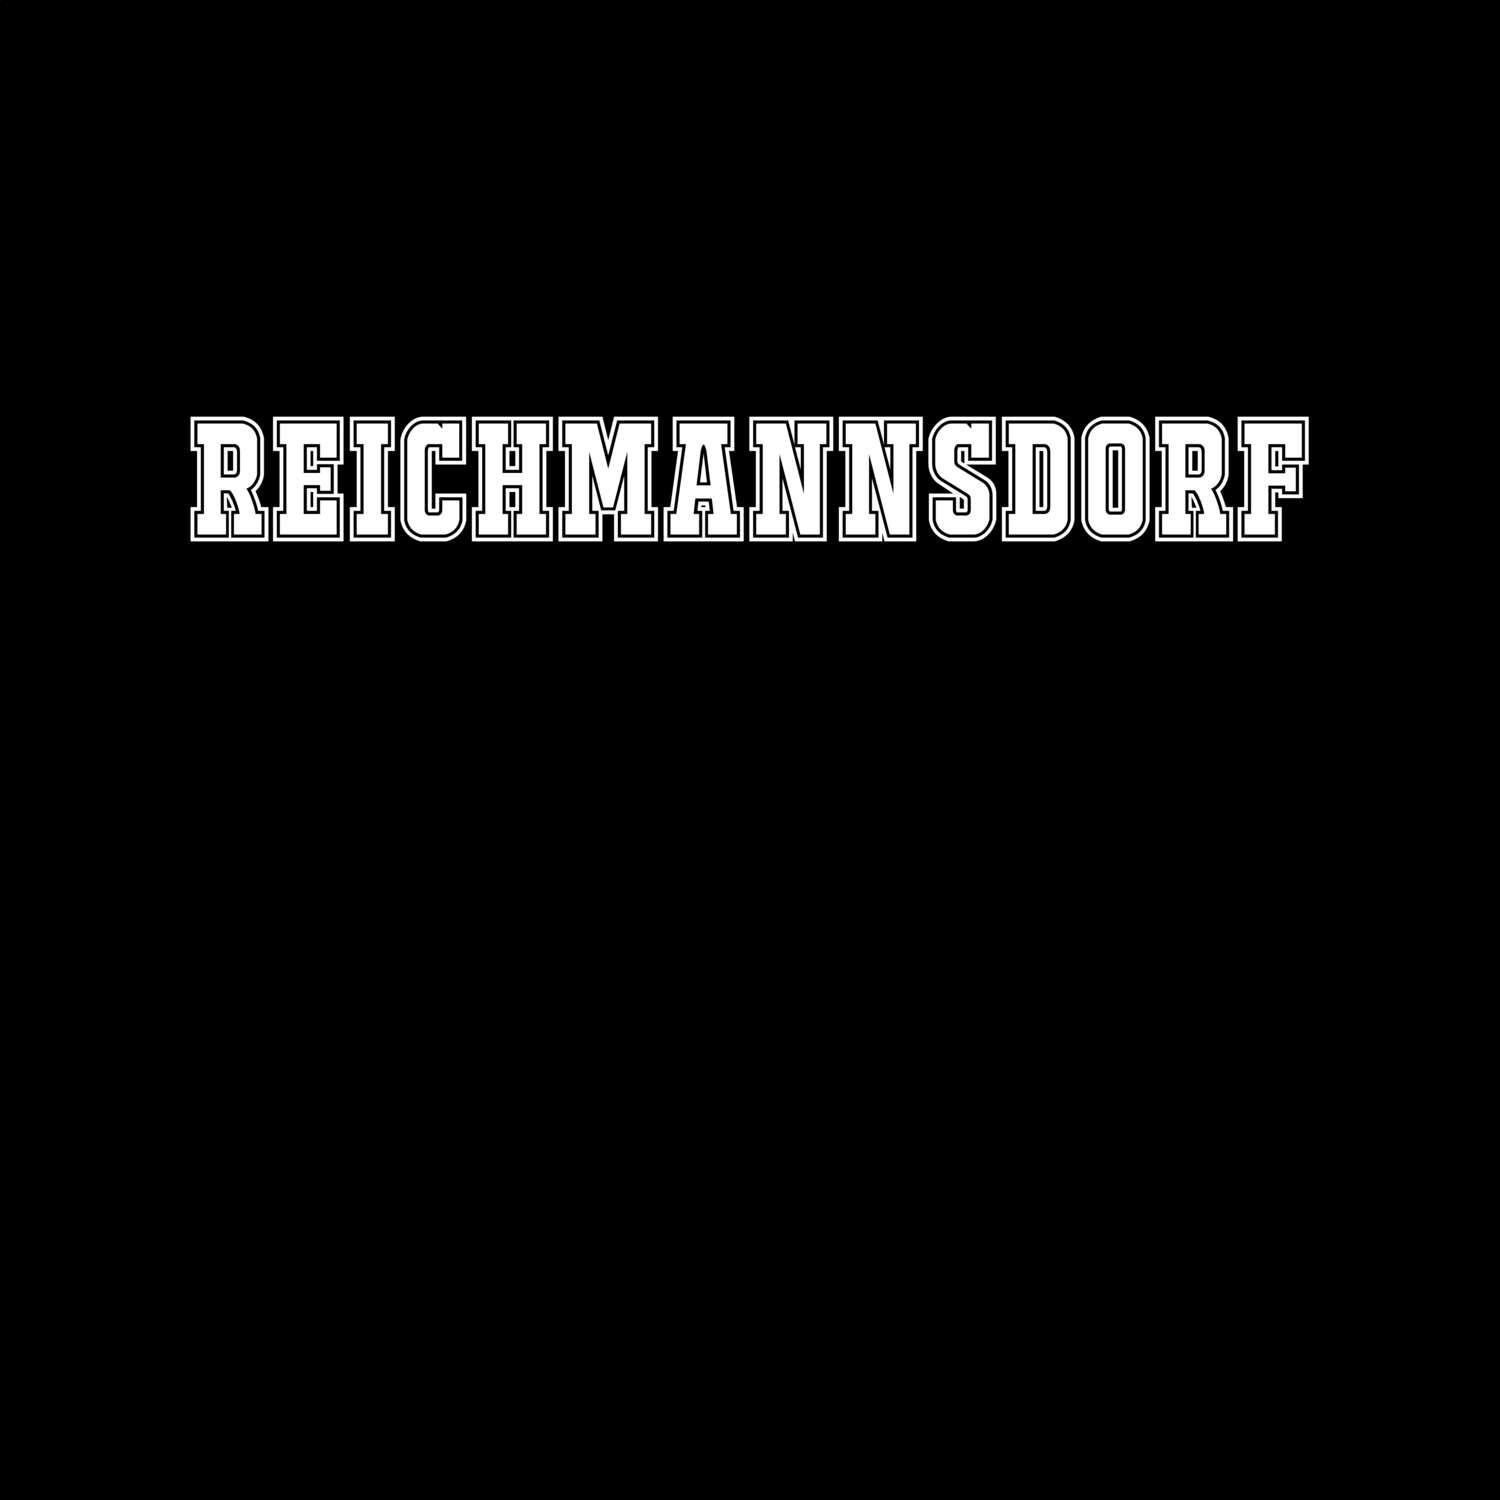 Reichmannsdorf T-Shirt »Classic«